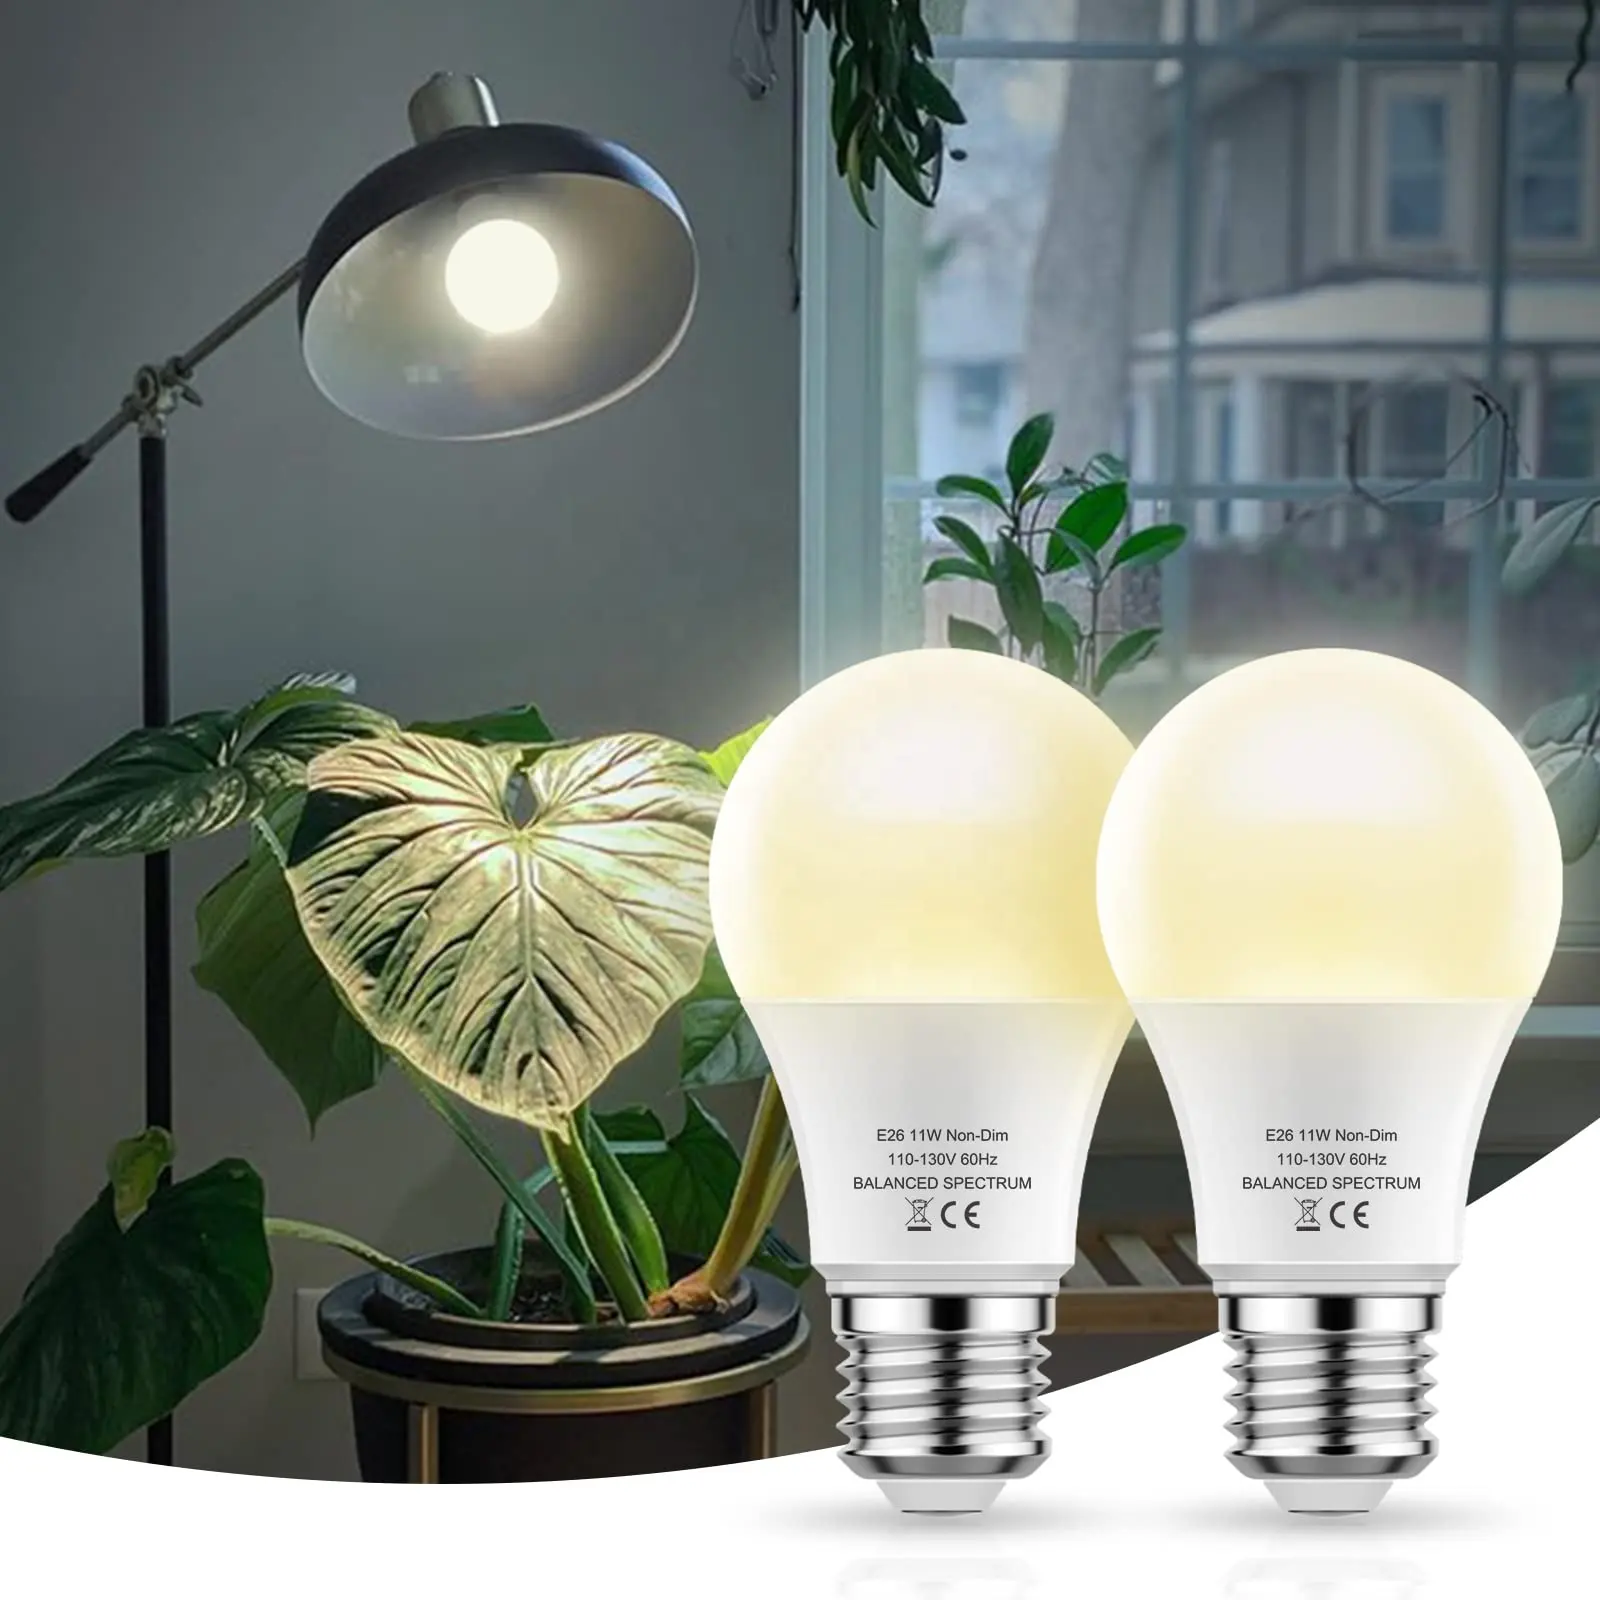 11W Full Spectrum LED Plant Grow Light E26 base Indoor growth bulb adatto fiore serra vegetale